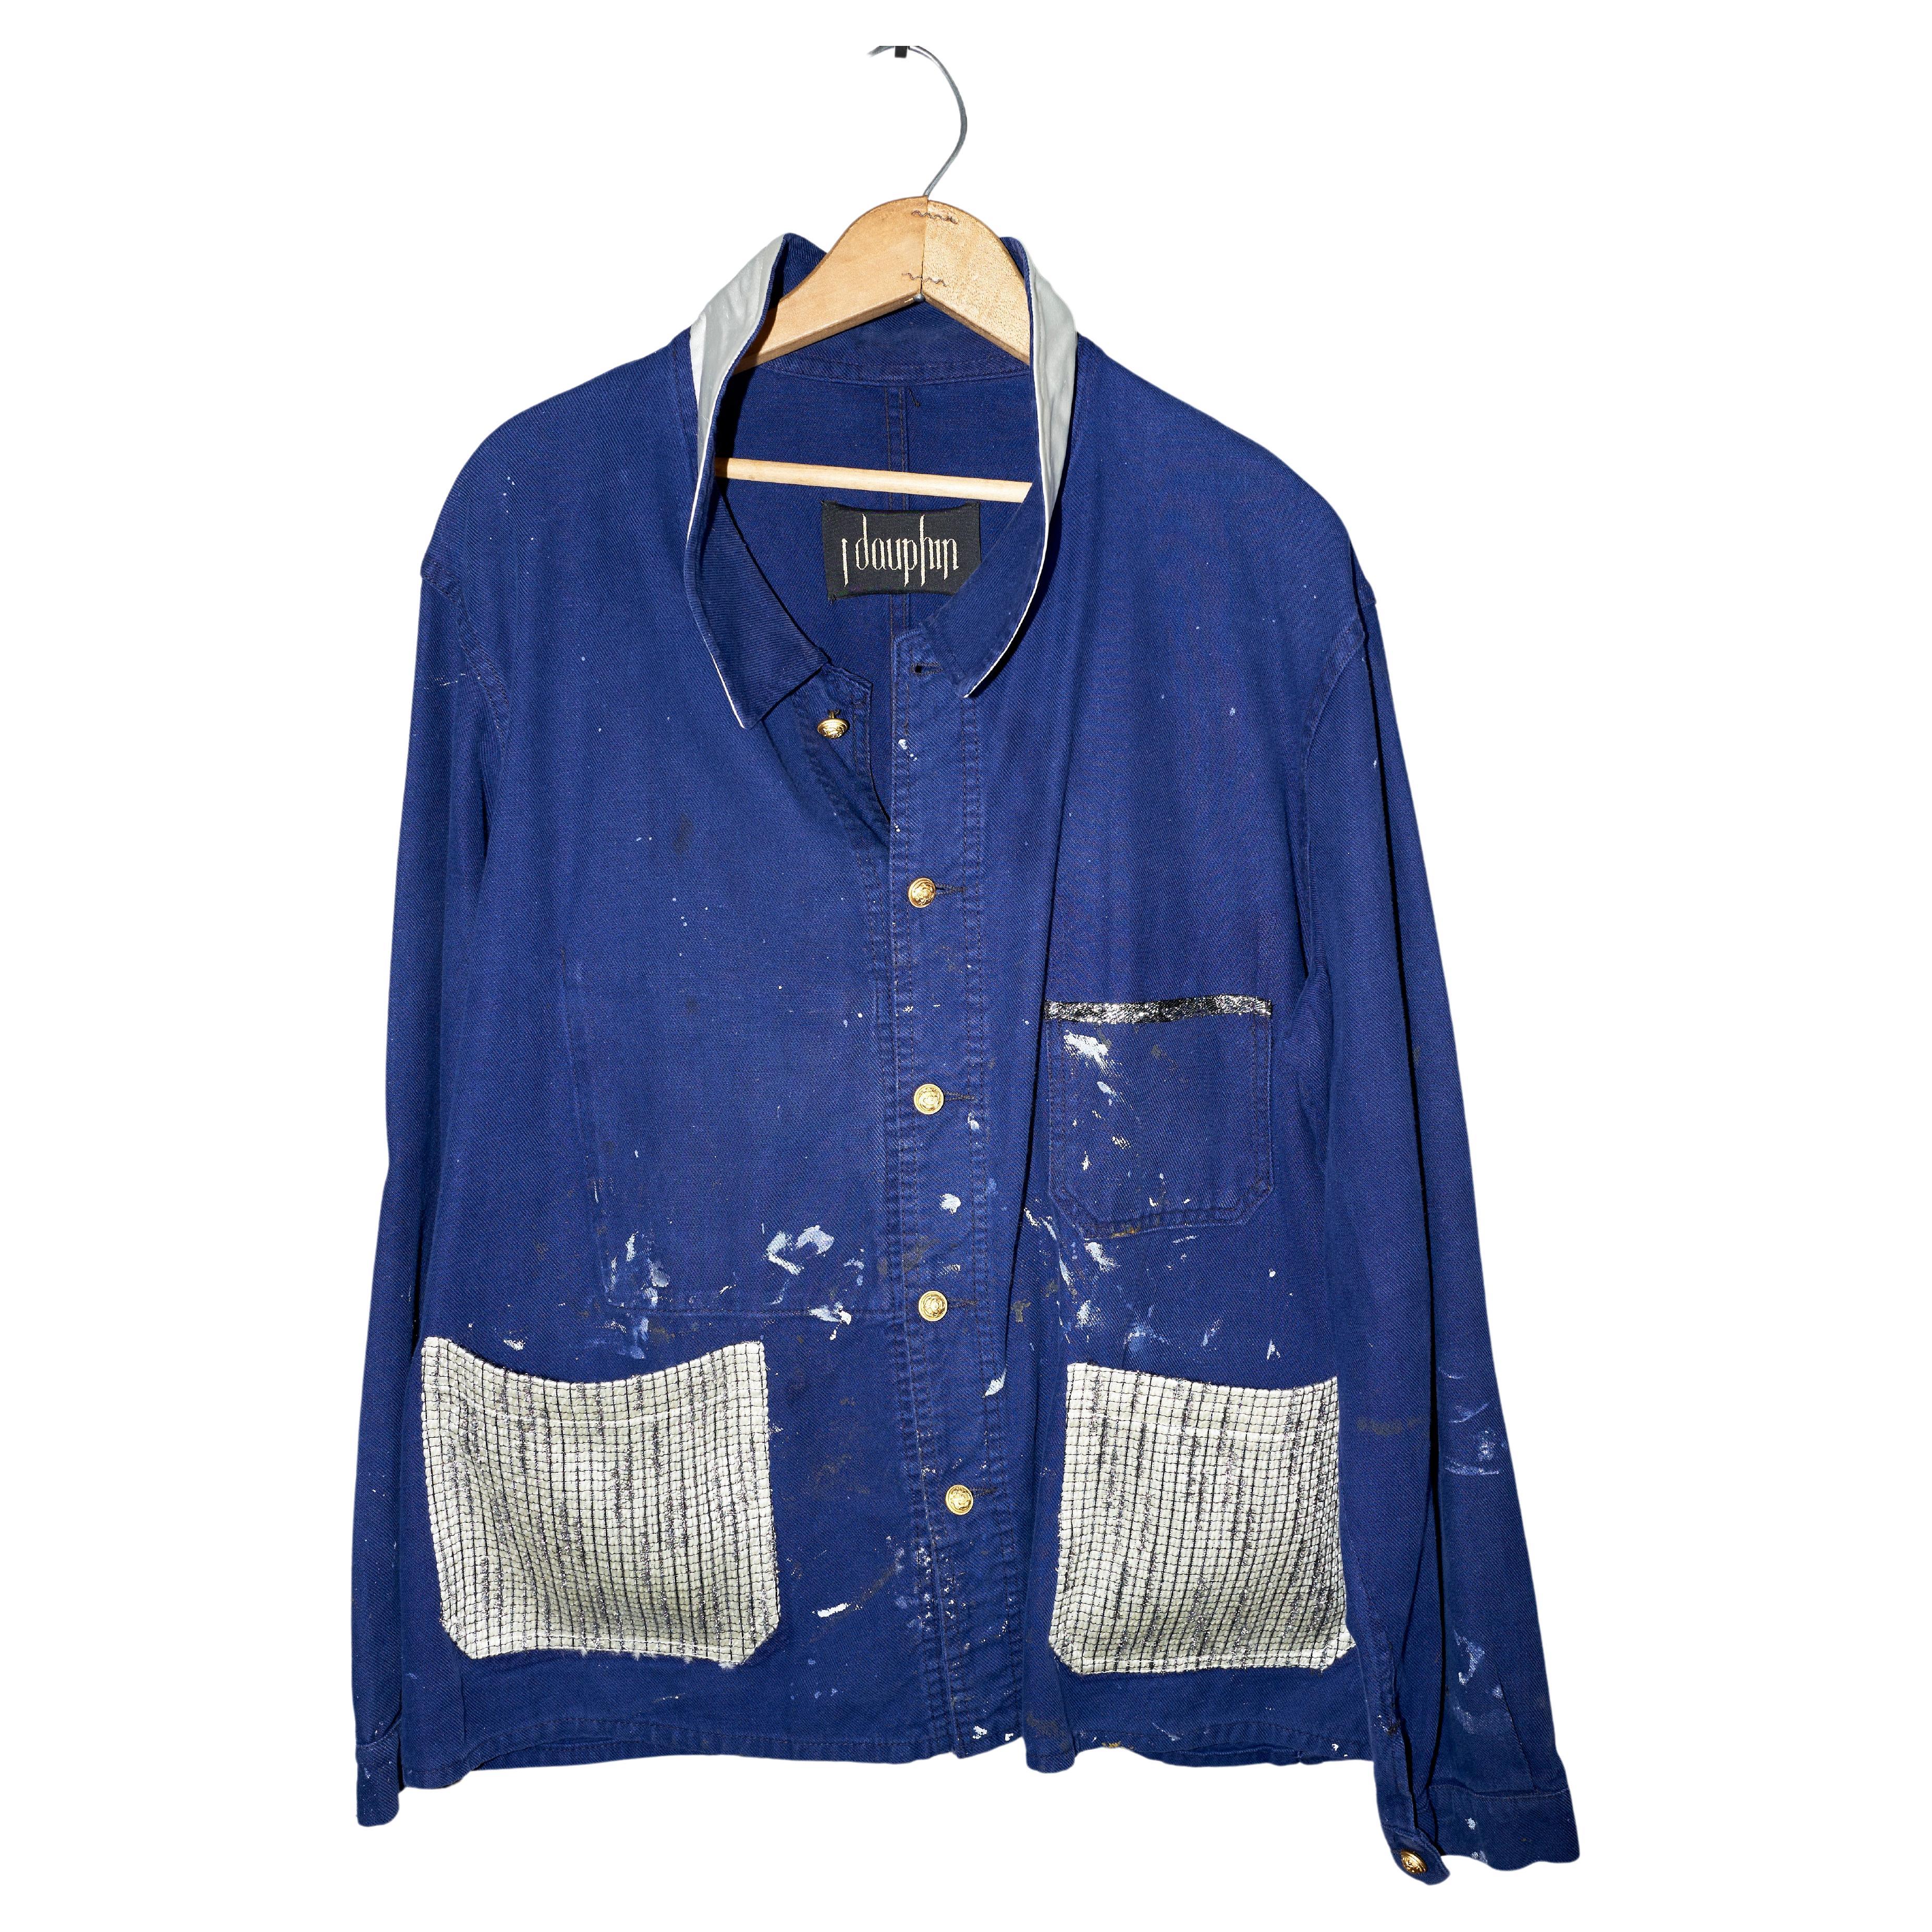 Blue Jacket White Lurex Tweed  Pockets French Workwear One of a kind J Dauphin